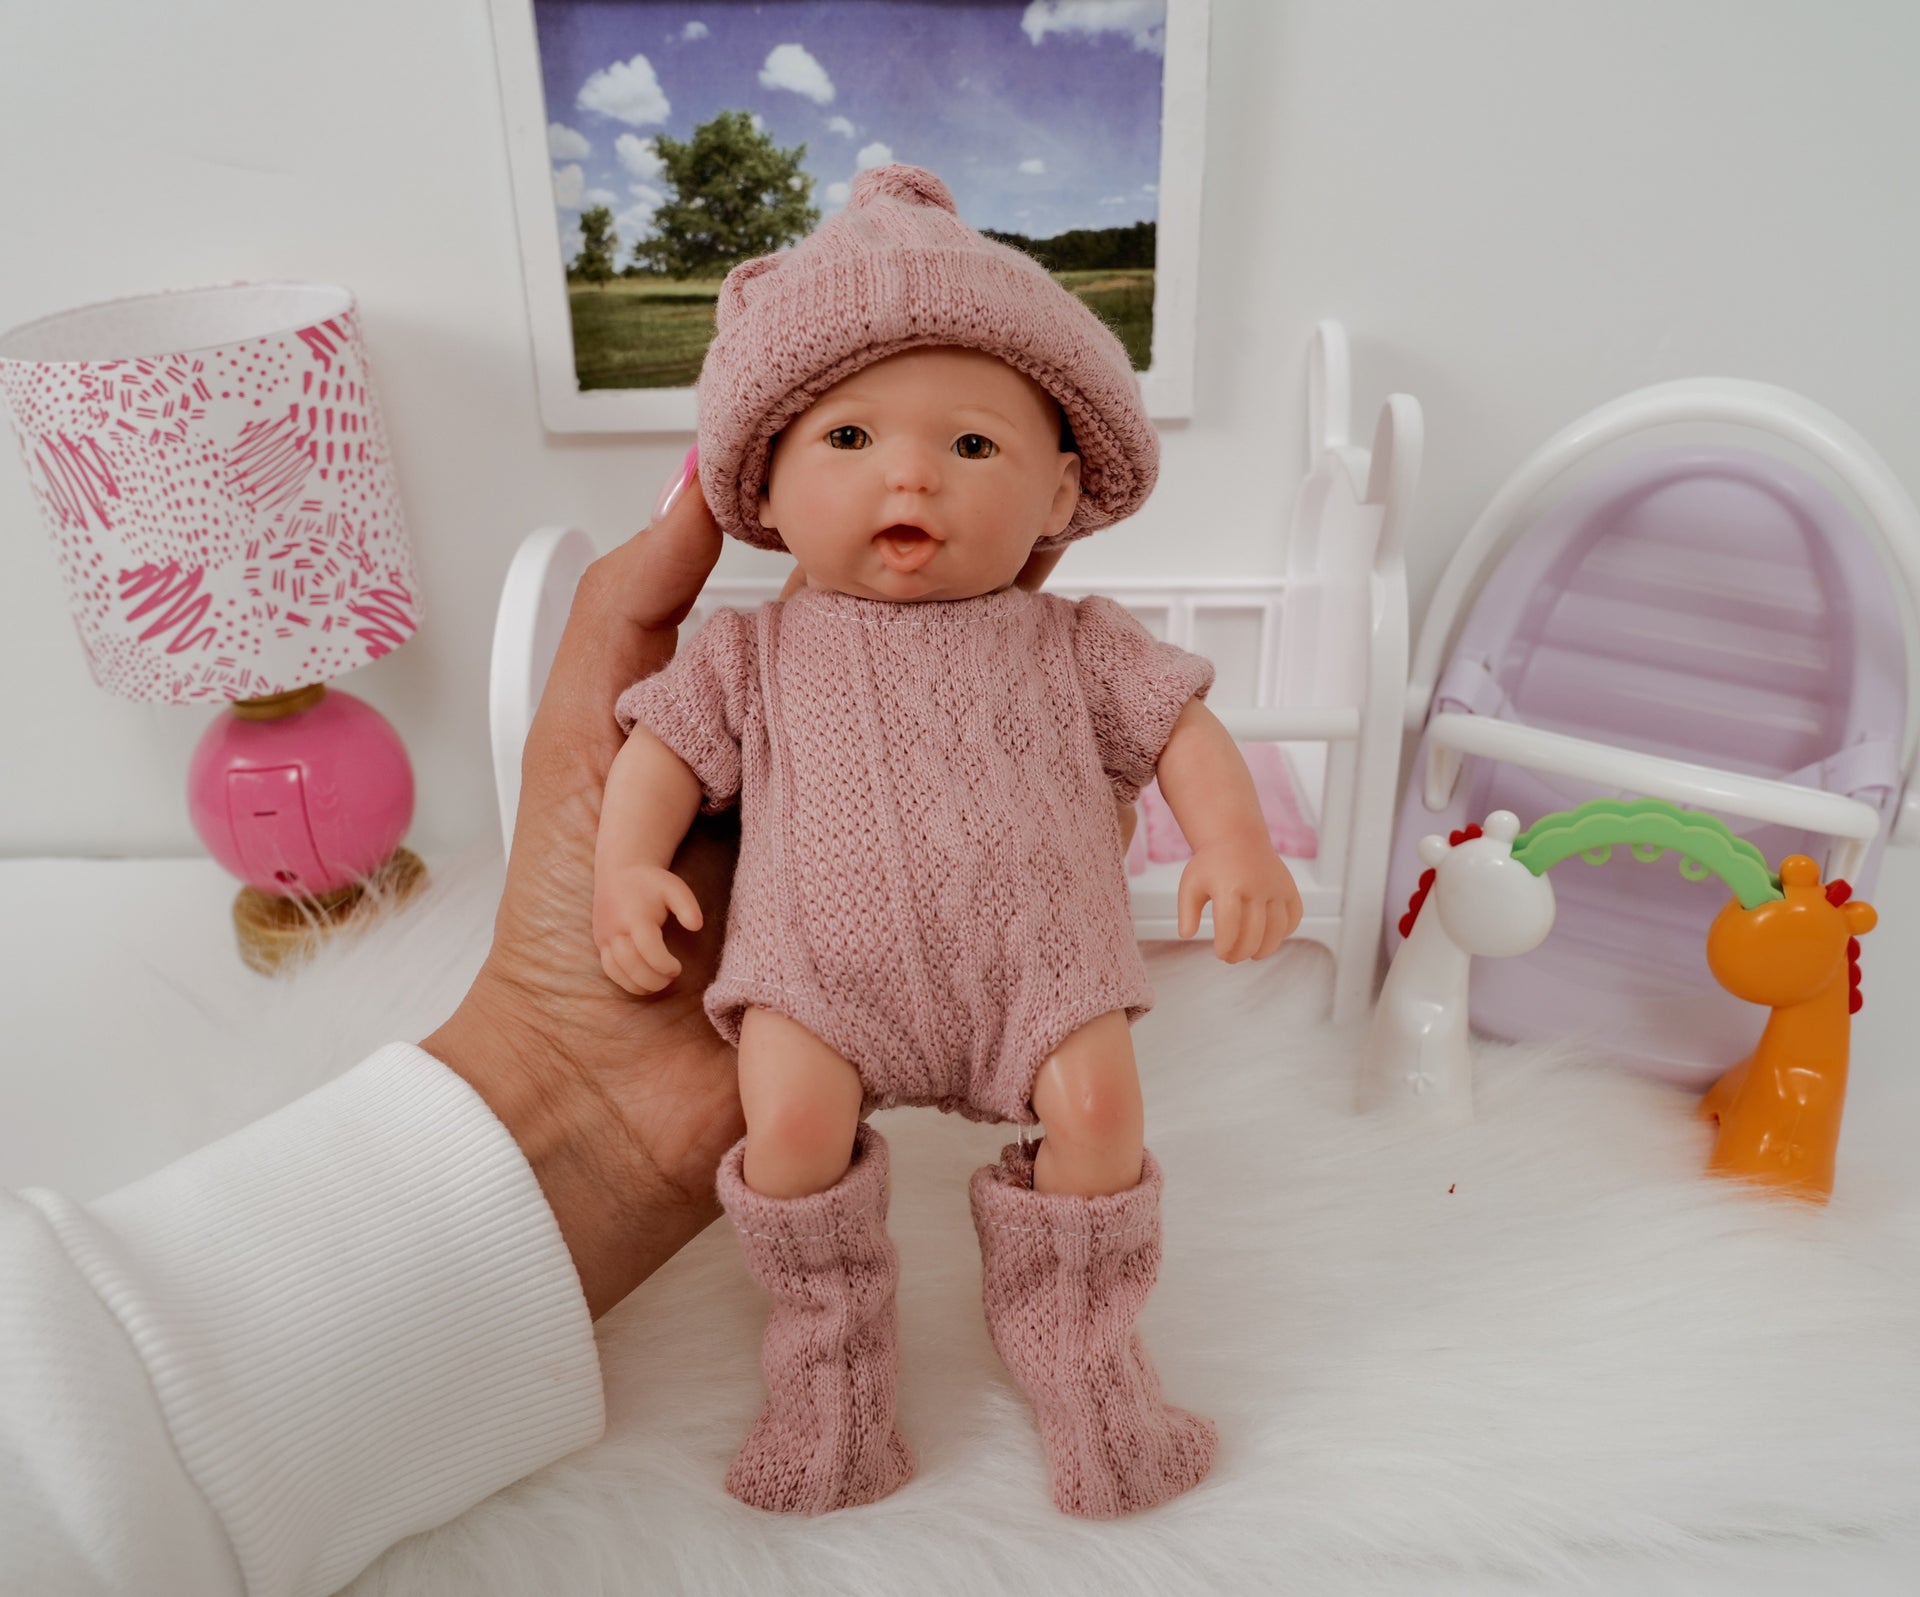 Reborn Shoppe Zala Reborn Baby Doll Girl $89.99 (reg $160)